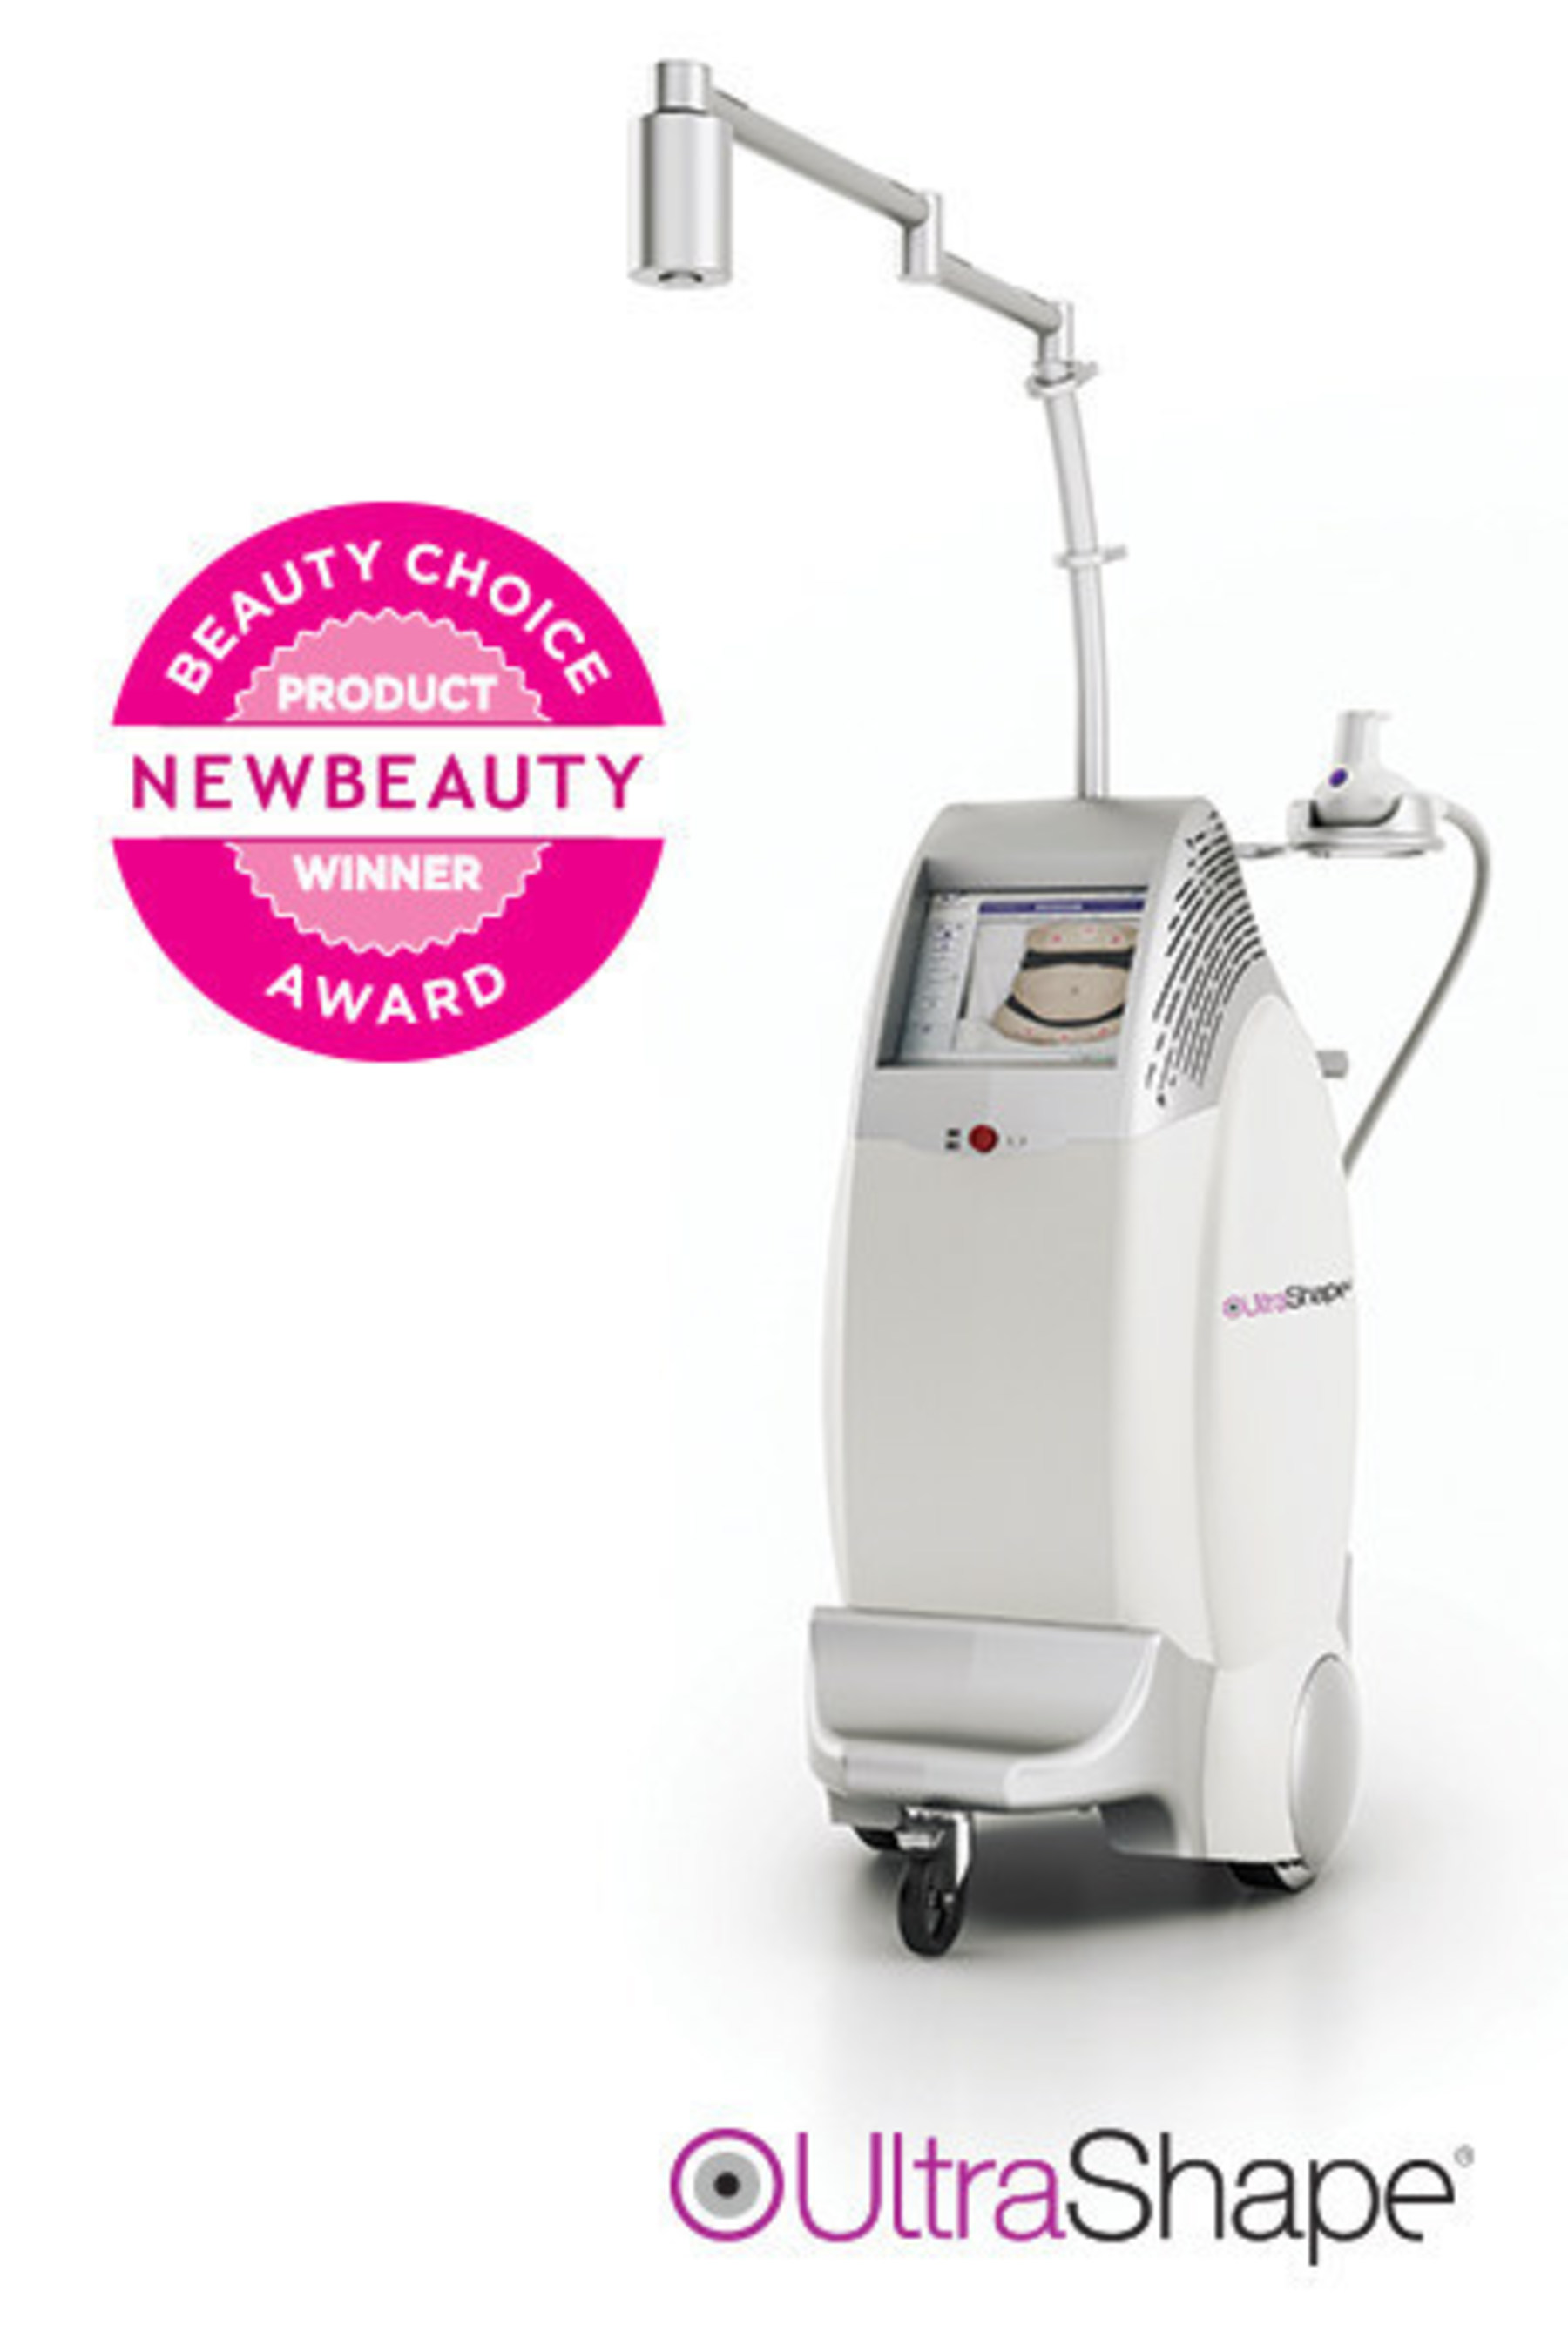 UltraShape Wins NewBeauty Magazine Beauty Choice Awards For Best Body-Contouring Treatment